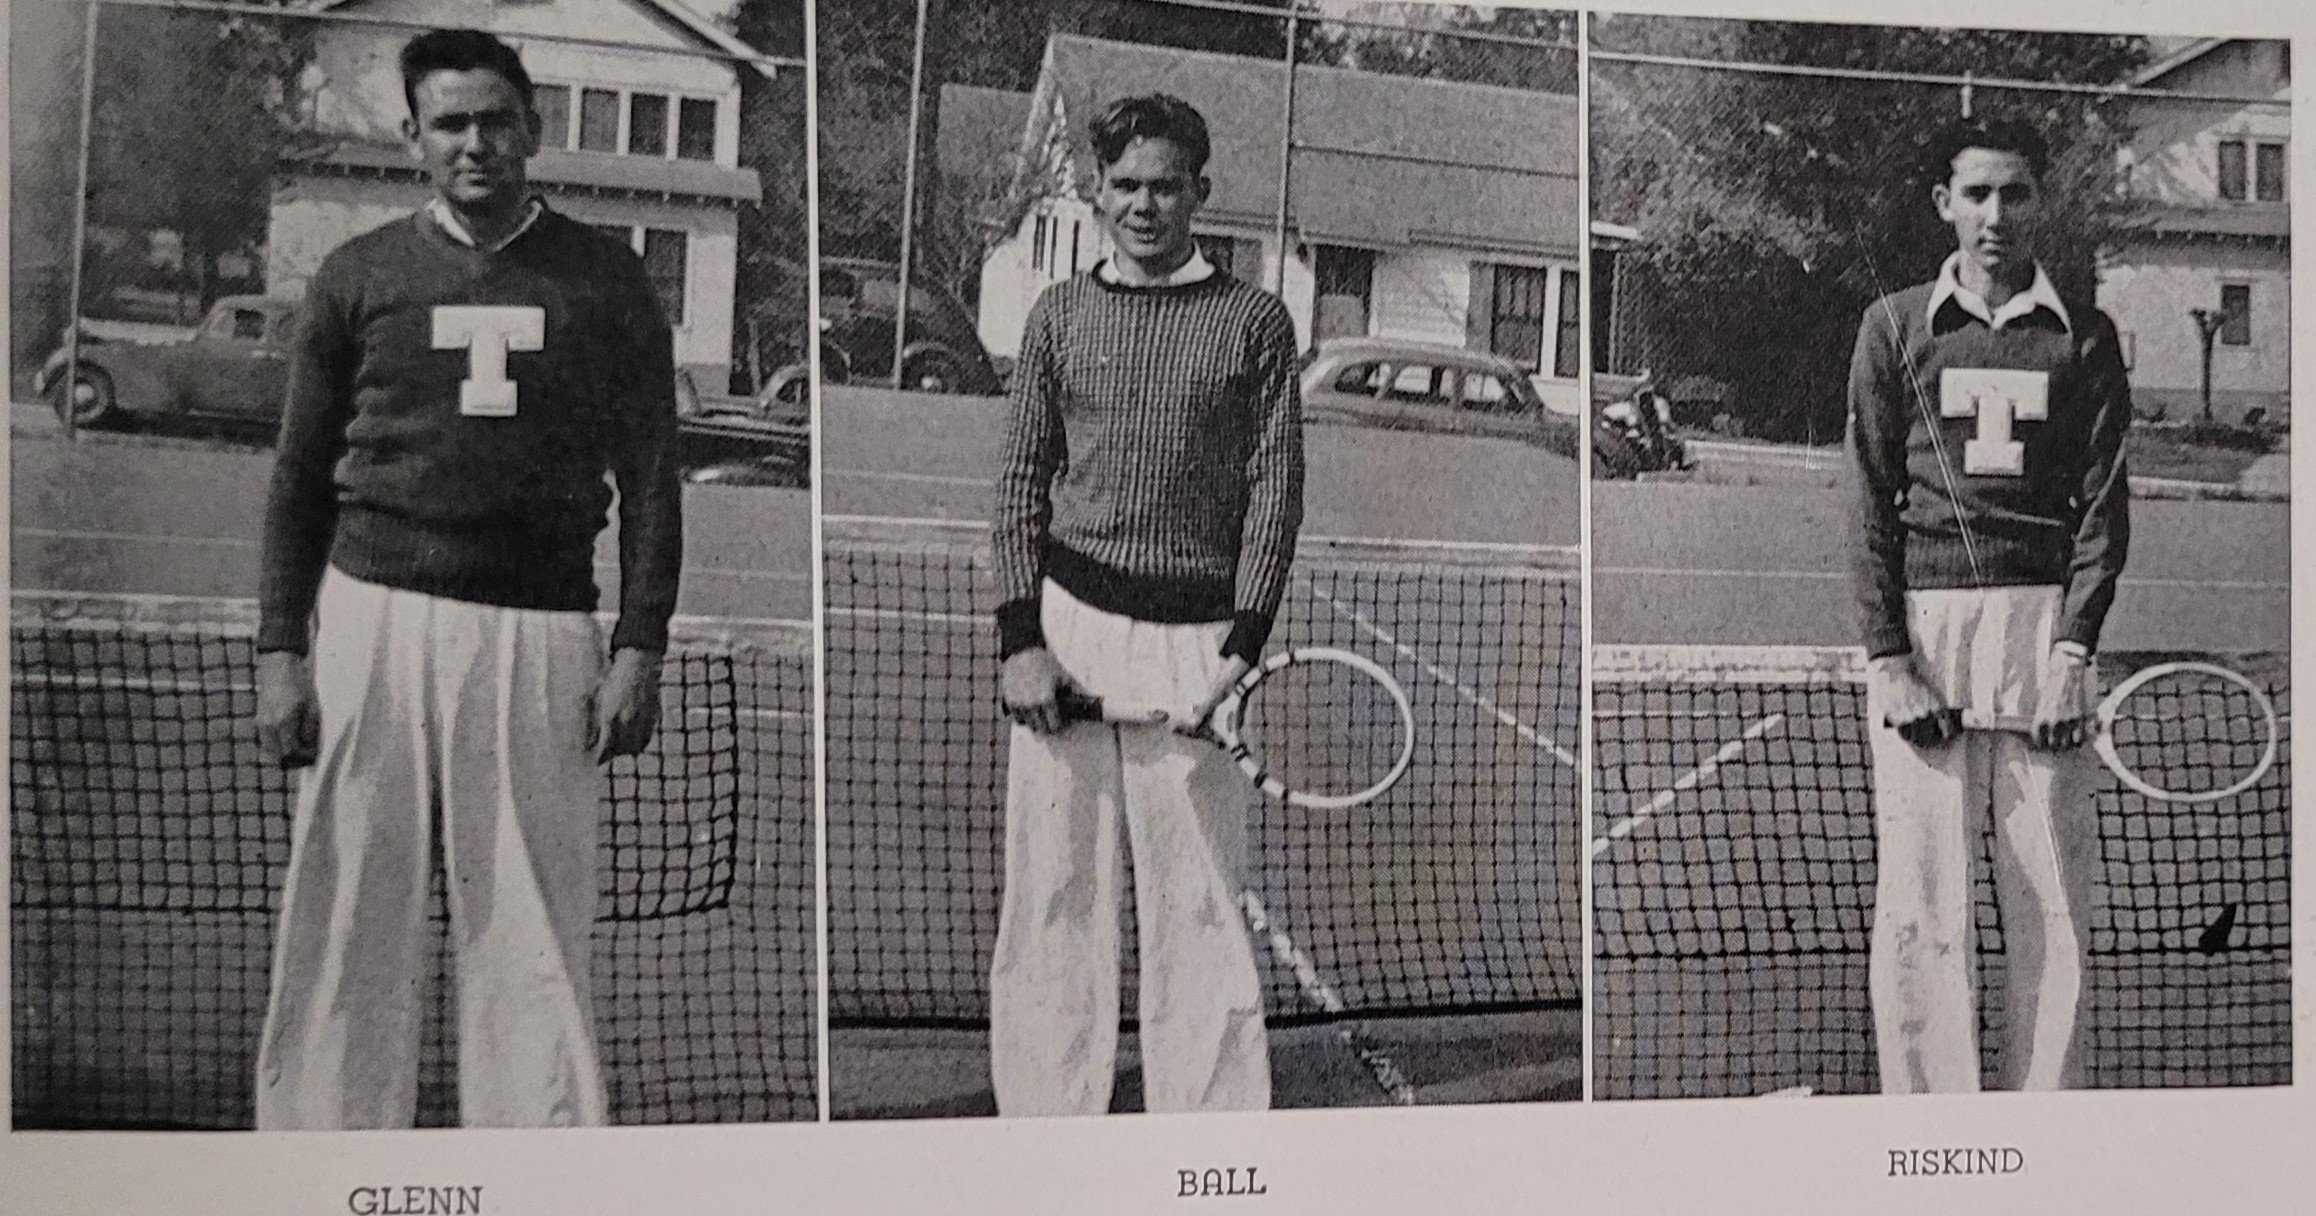  1940-1941 tennis  Glenn, Ball, Riskind 